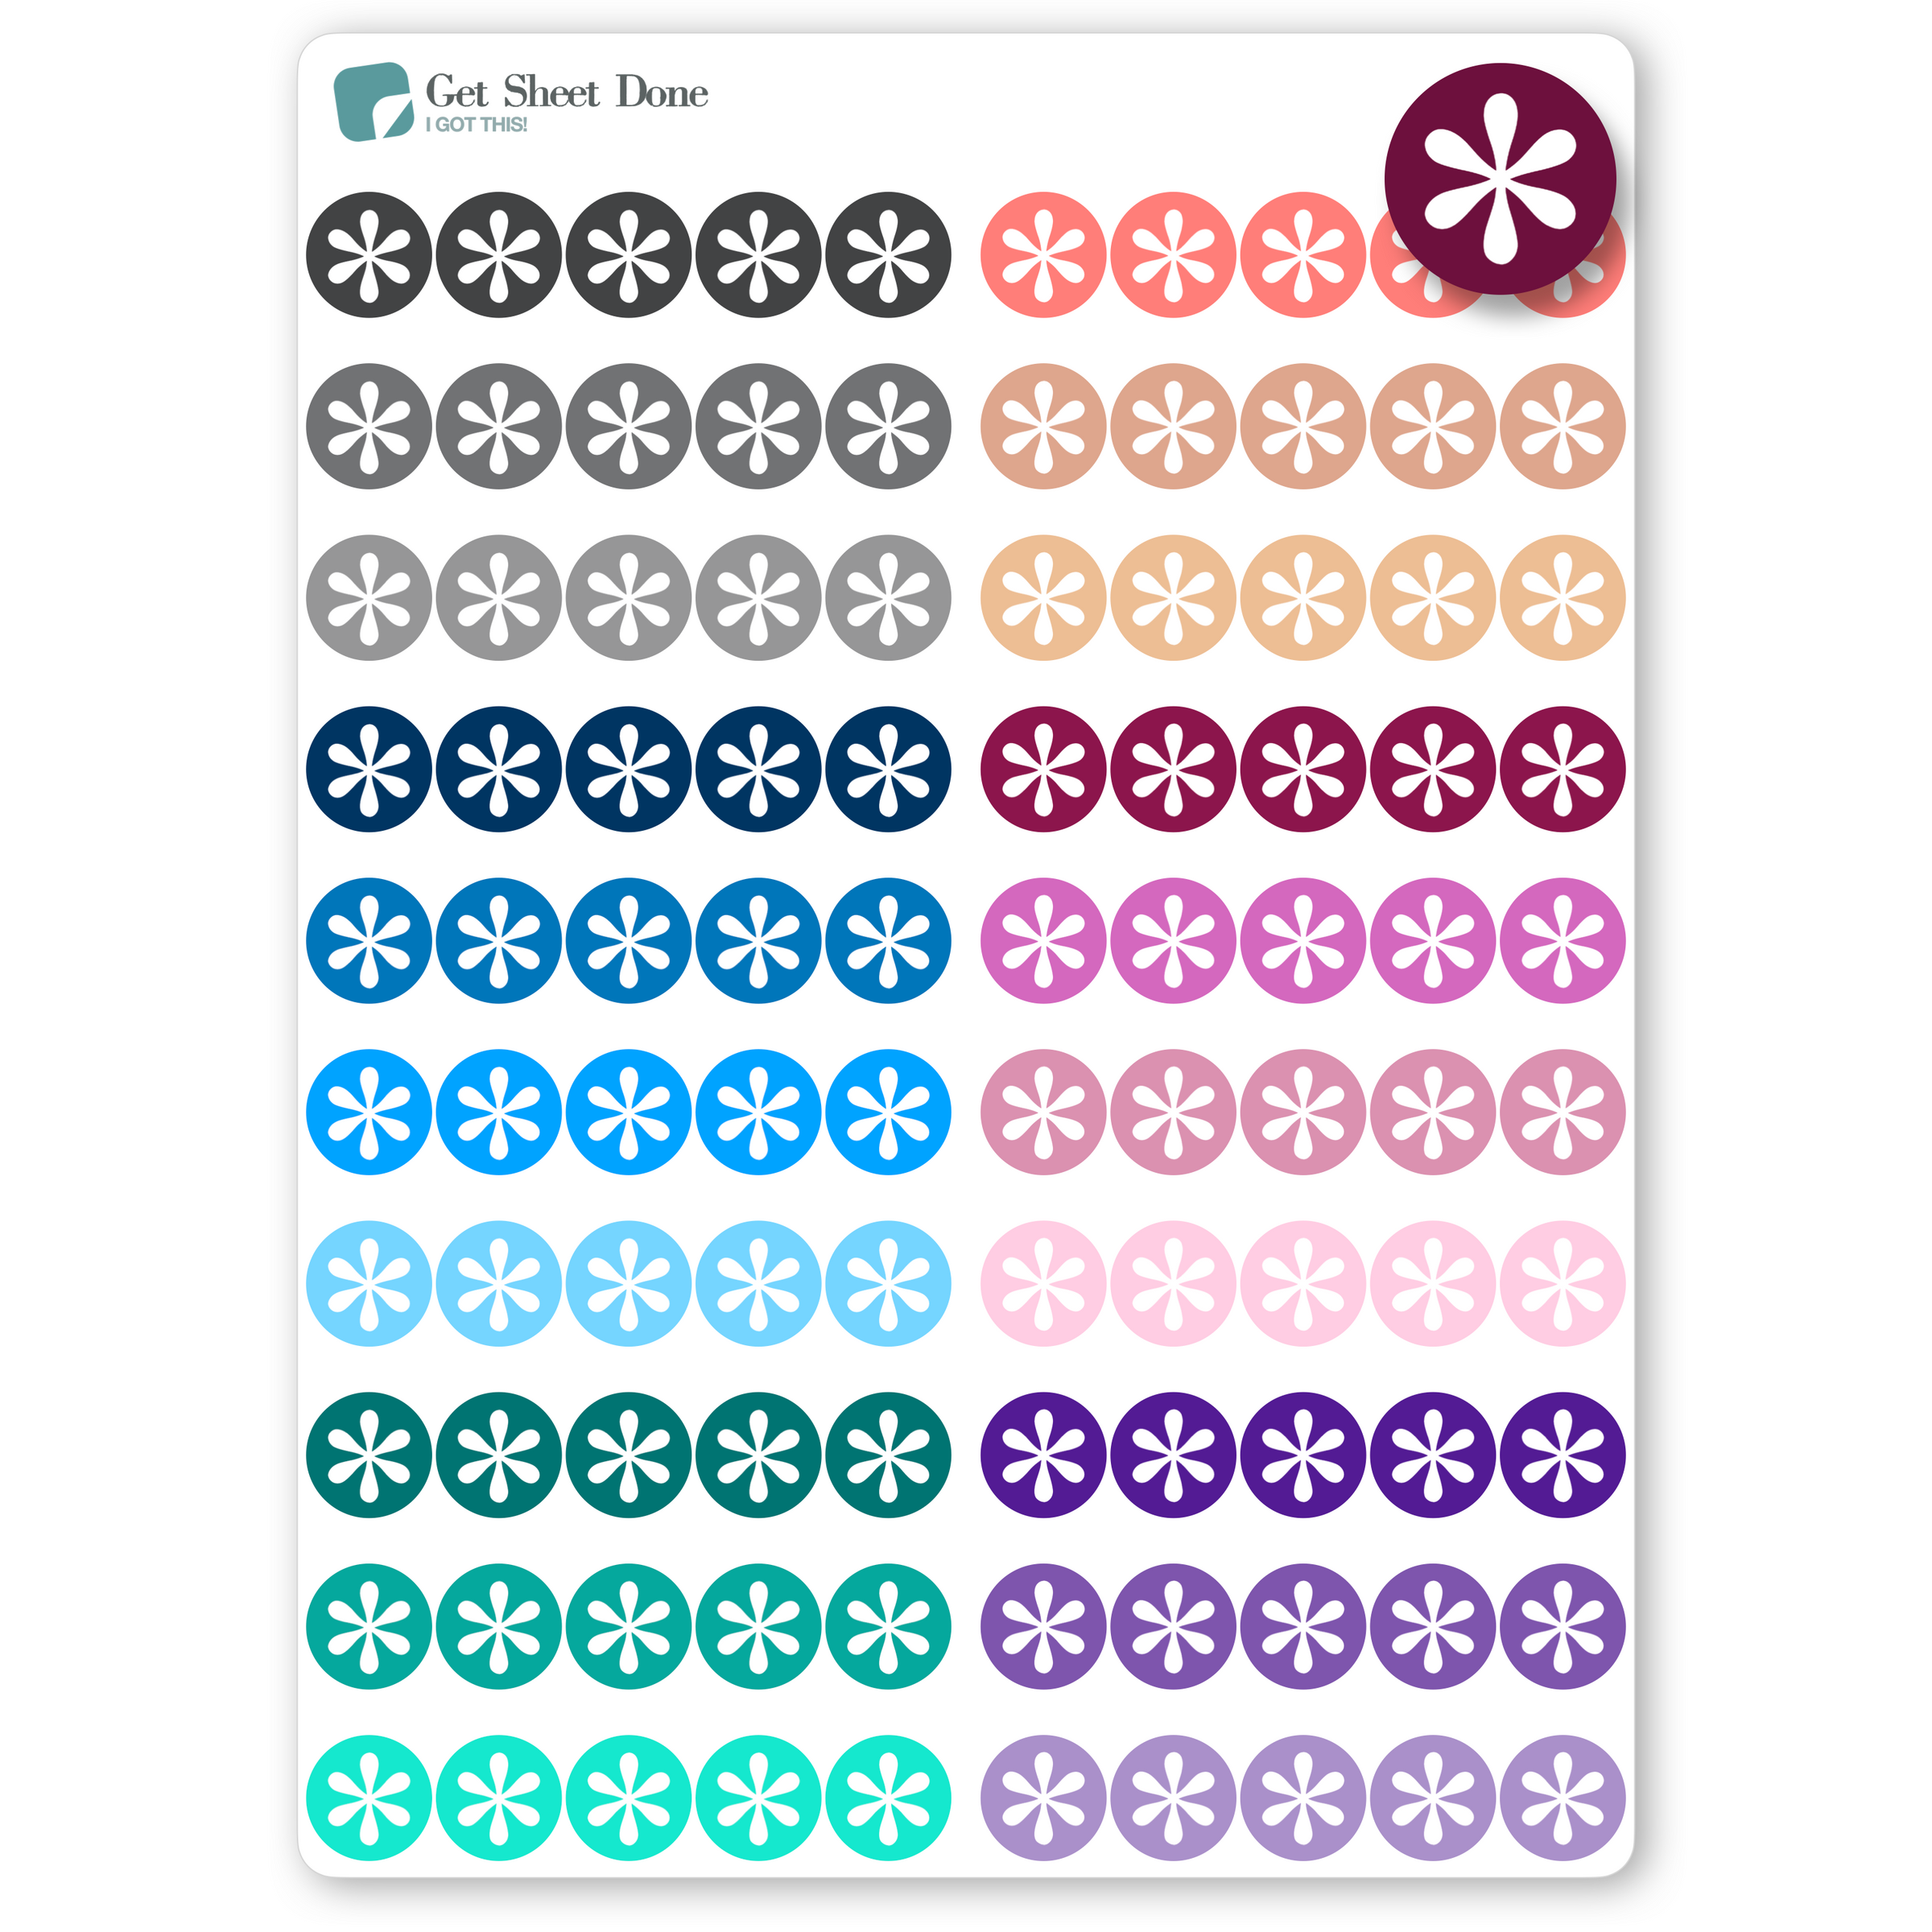 Asterisk Dot Planner Stickers/ DIY Calendar Stickers / Bullet Journaling / Bujo / Essential Productivity Stickers